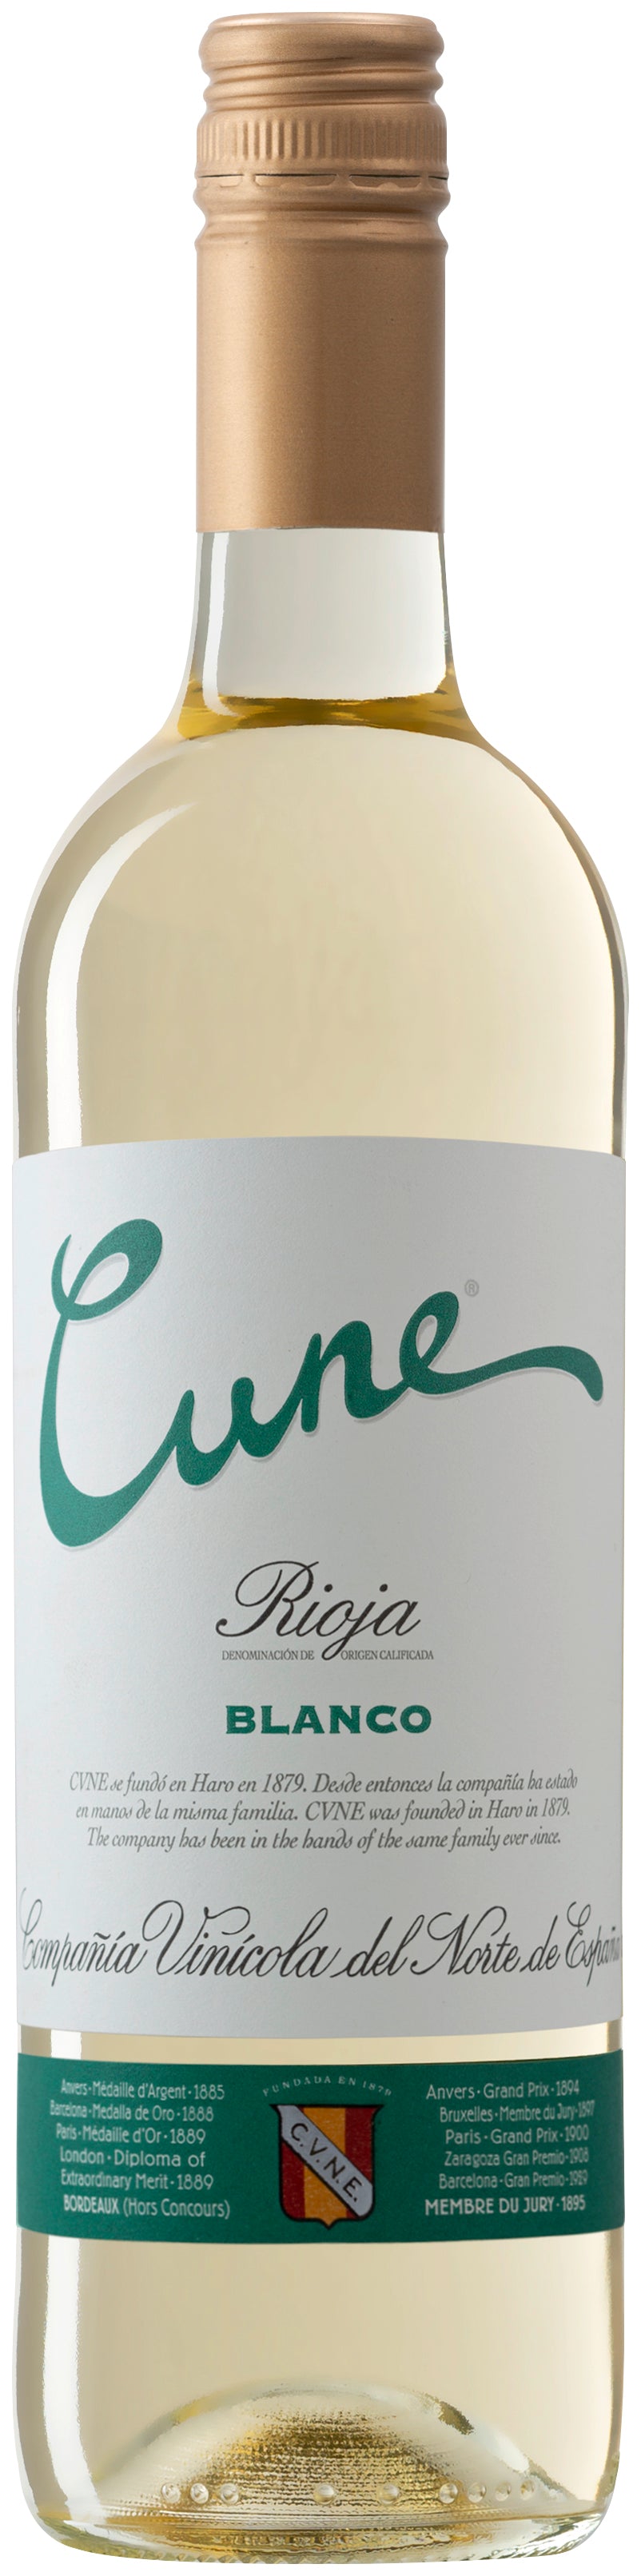 Cune Rioja Blanco - StillWine GmbH